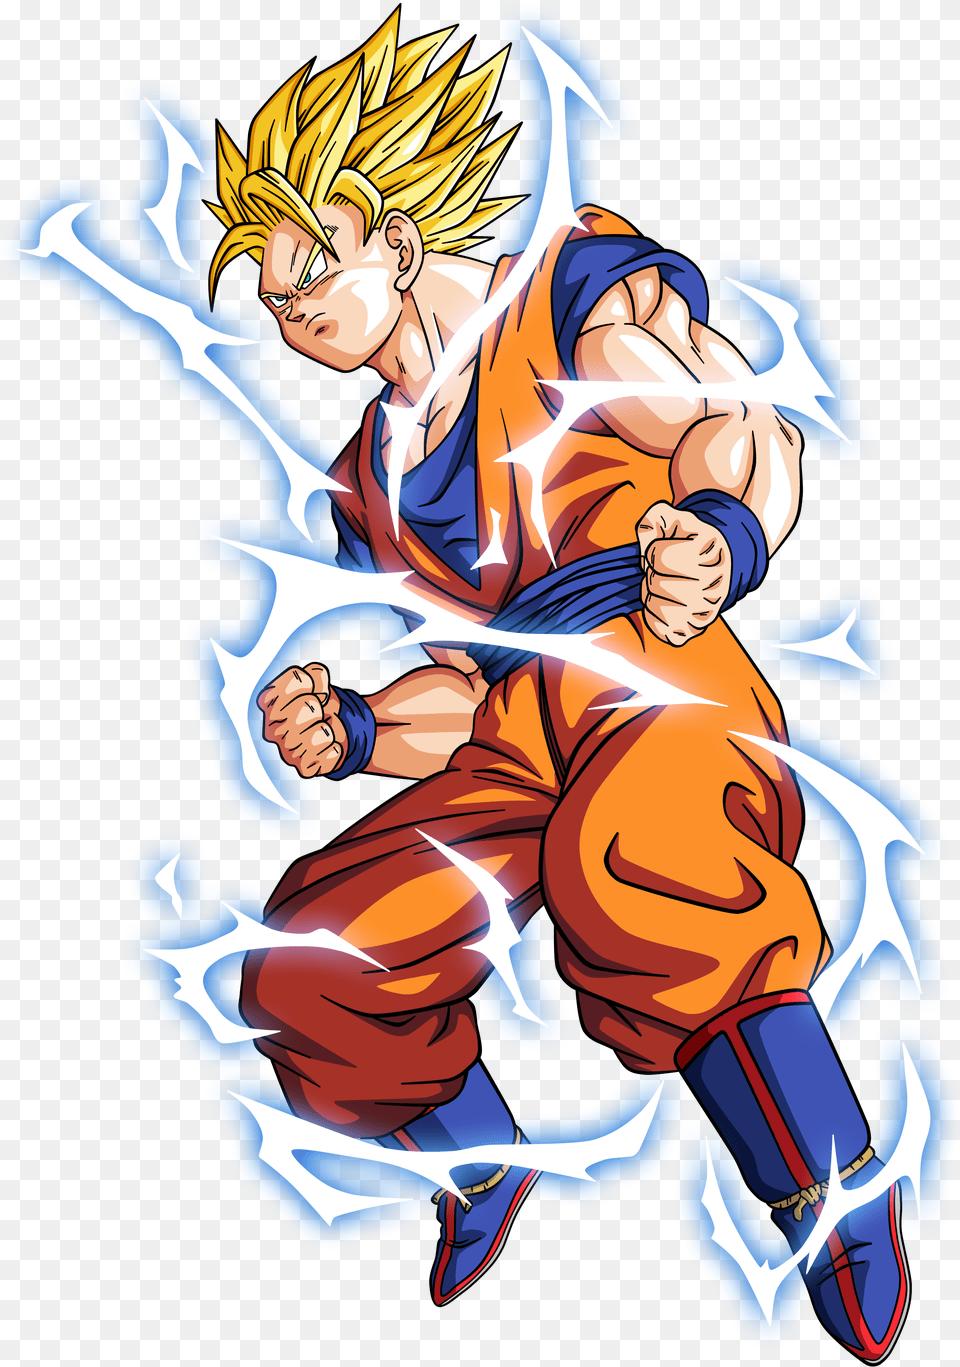 Goku Super Saiyan 2 By Bardocksonic D73adde Dragon Ball Z Goku Energy Iphone 7 Plus Case, Book, Comics, Publication, Anime Png